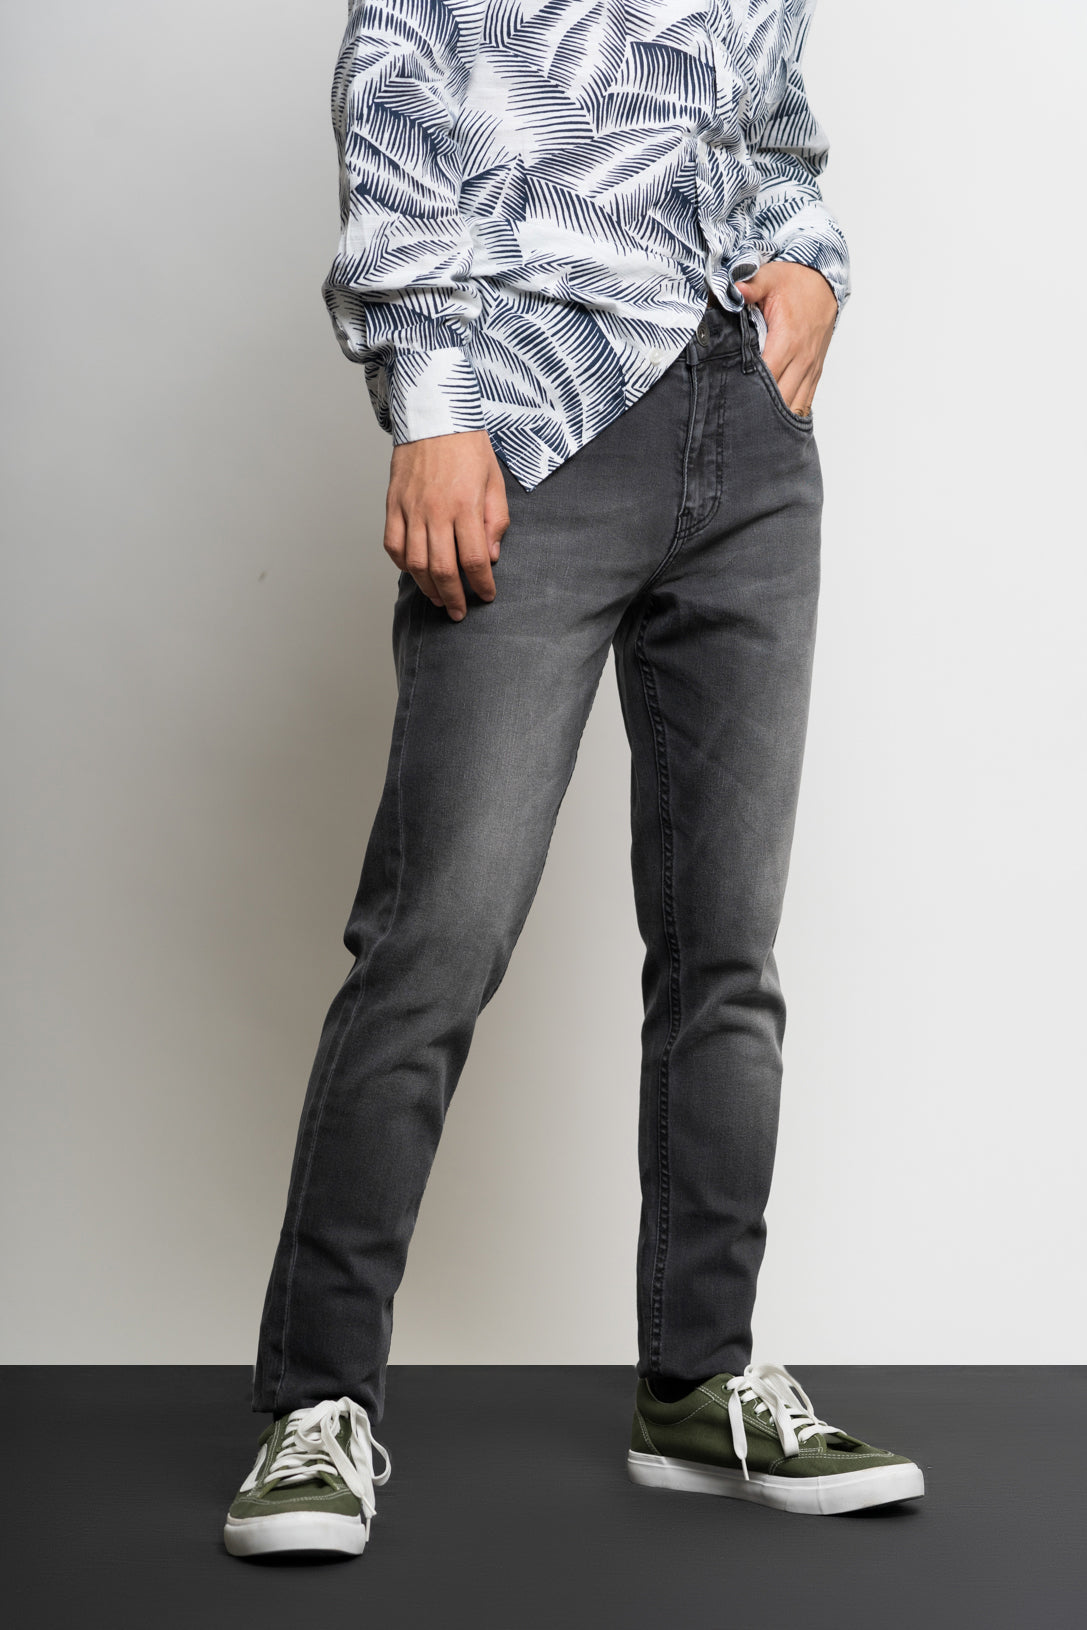 Unisex vintage grey jeans